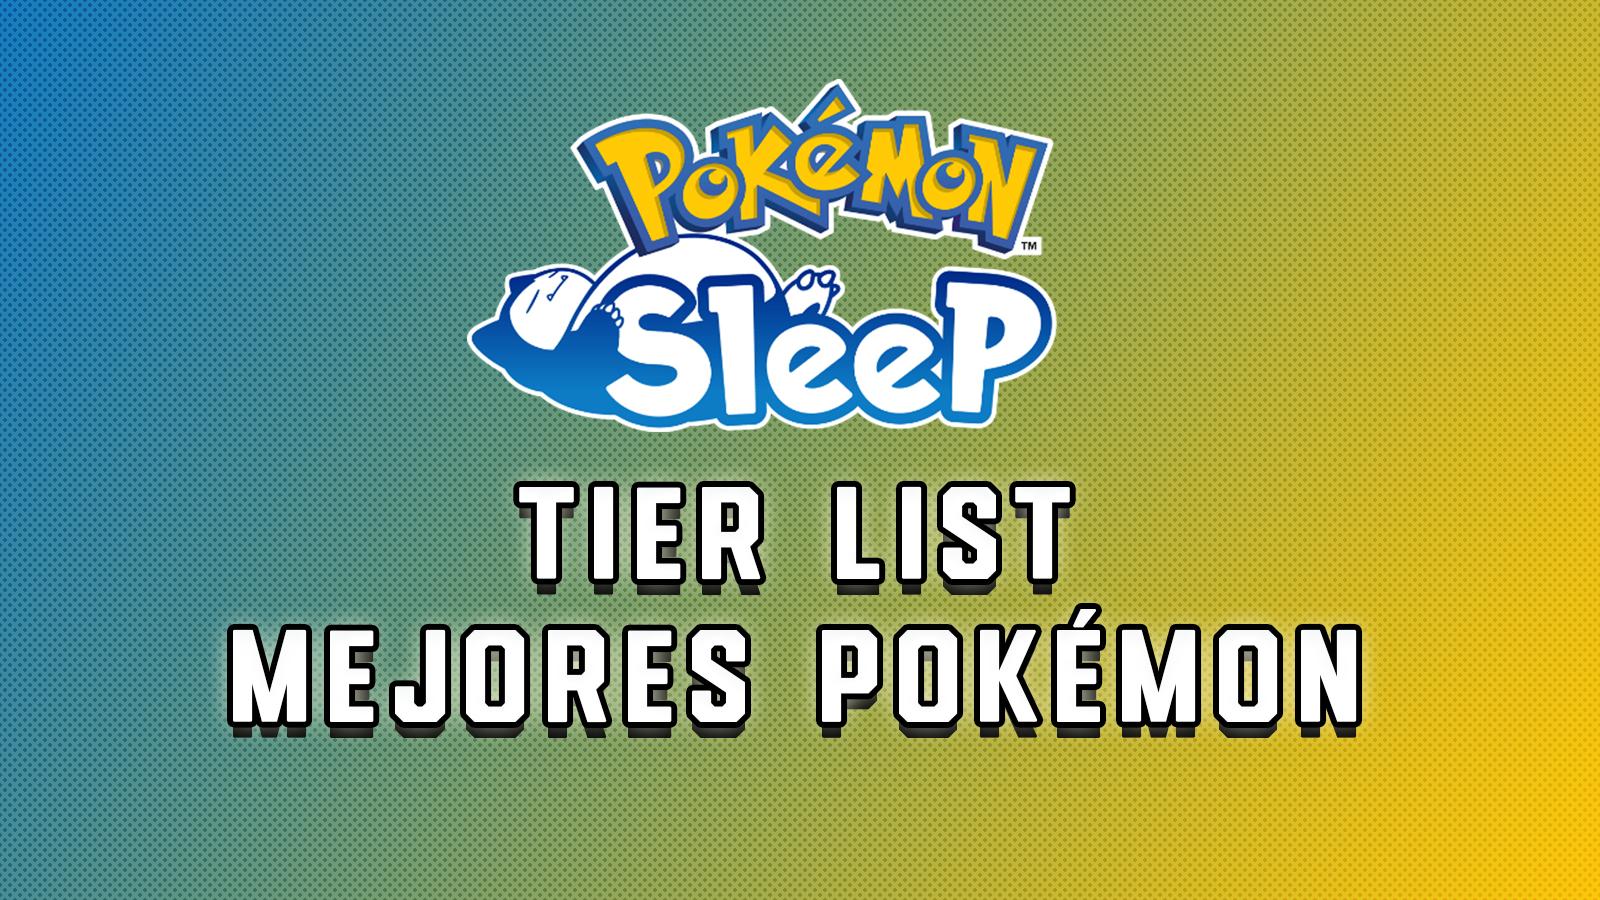 Mejores pokémon tier list pokémon sleep